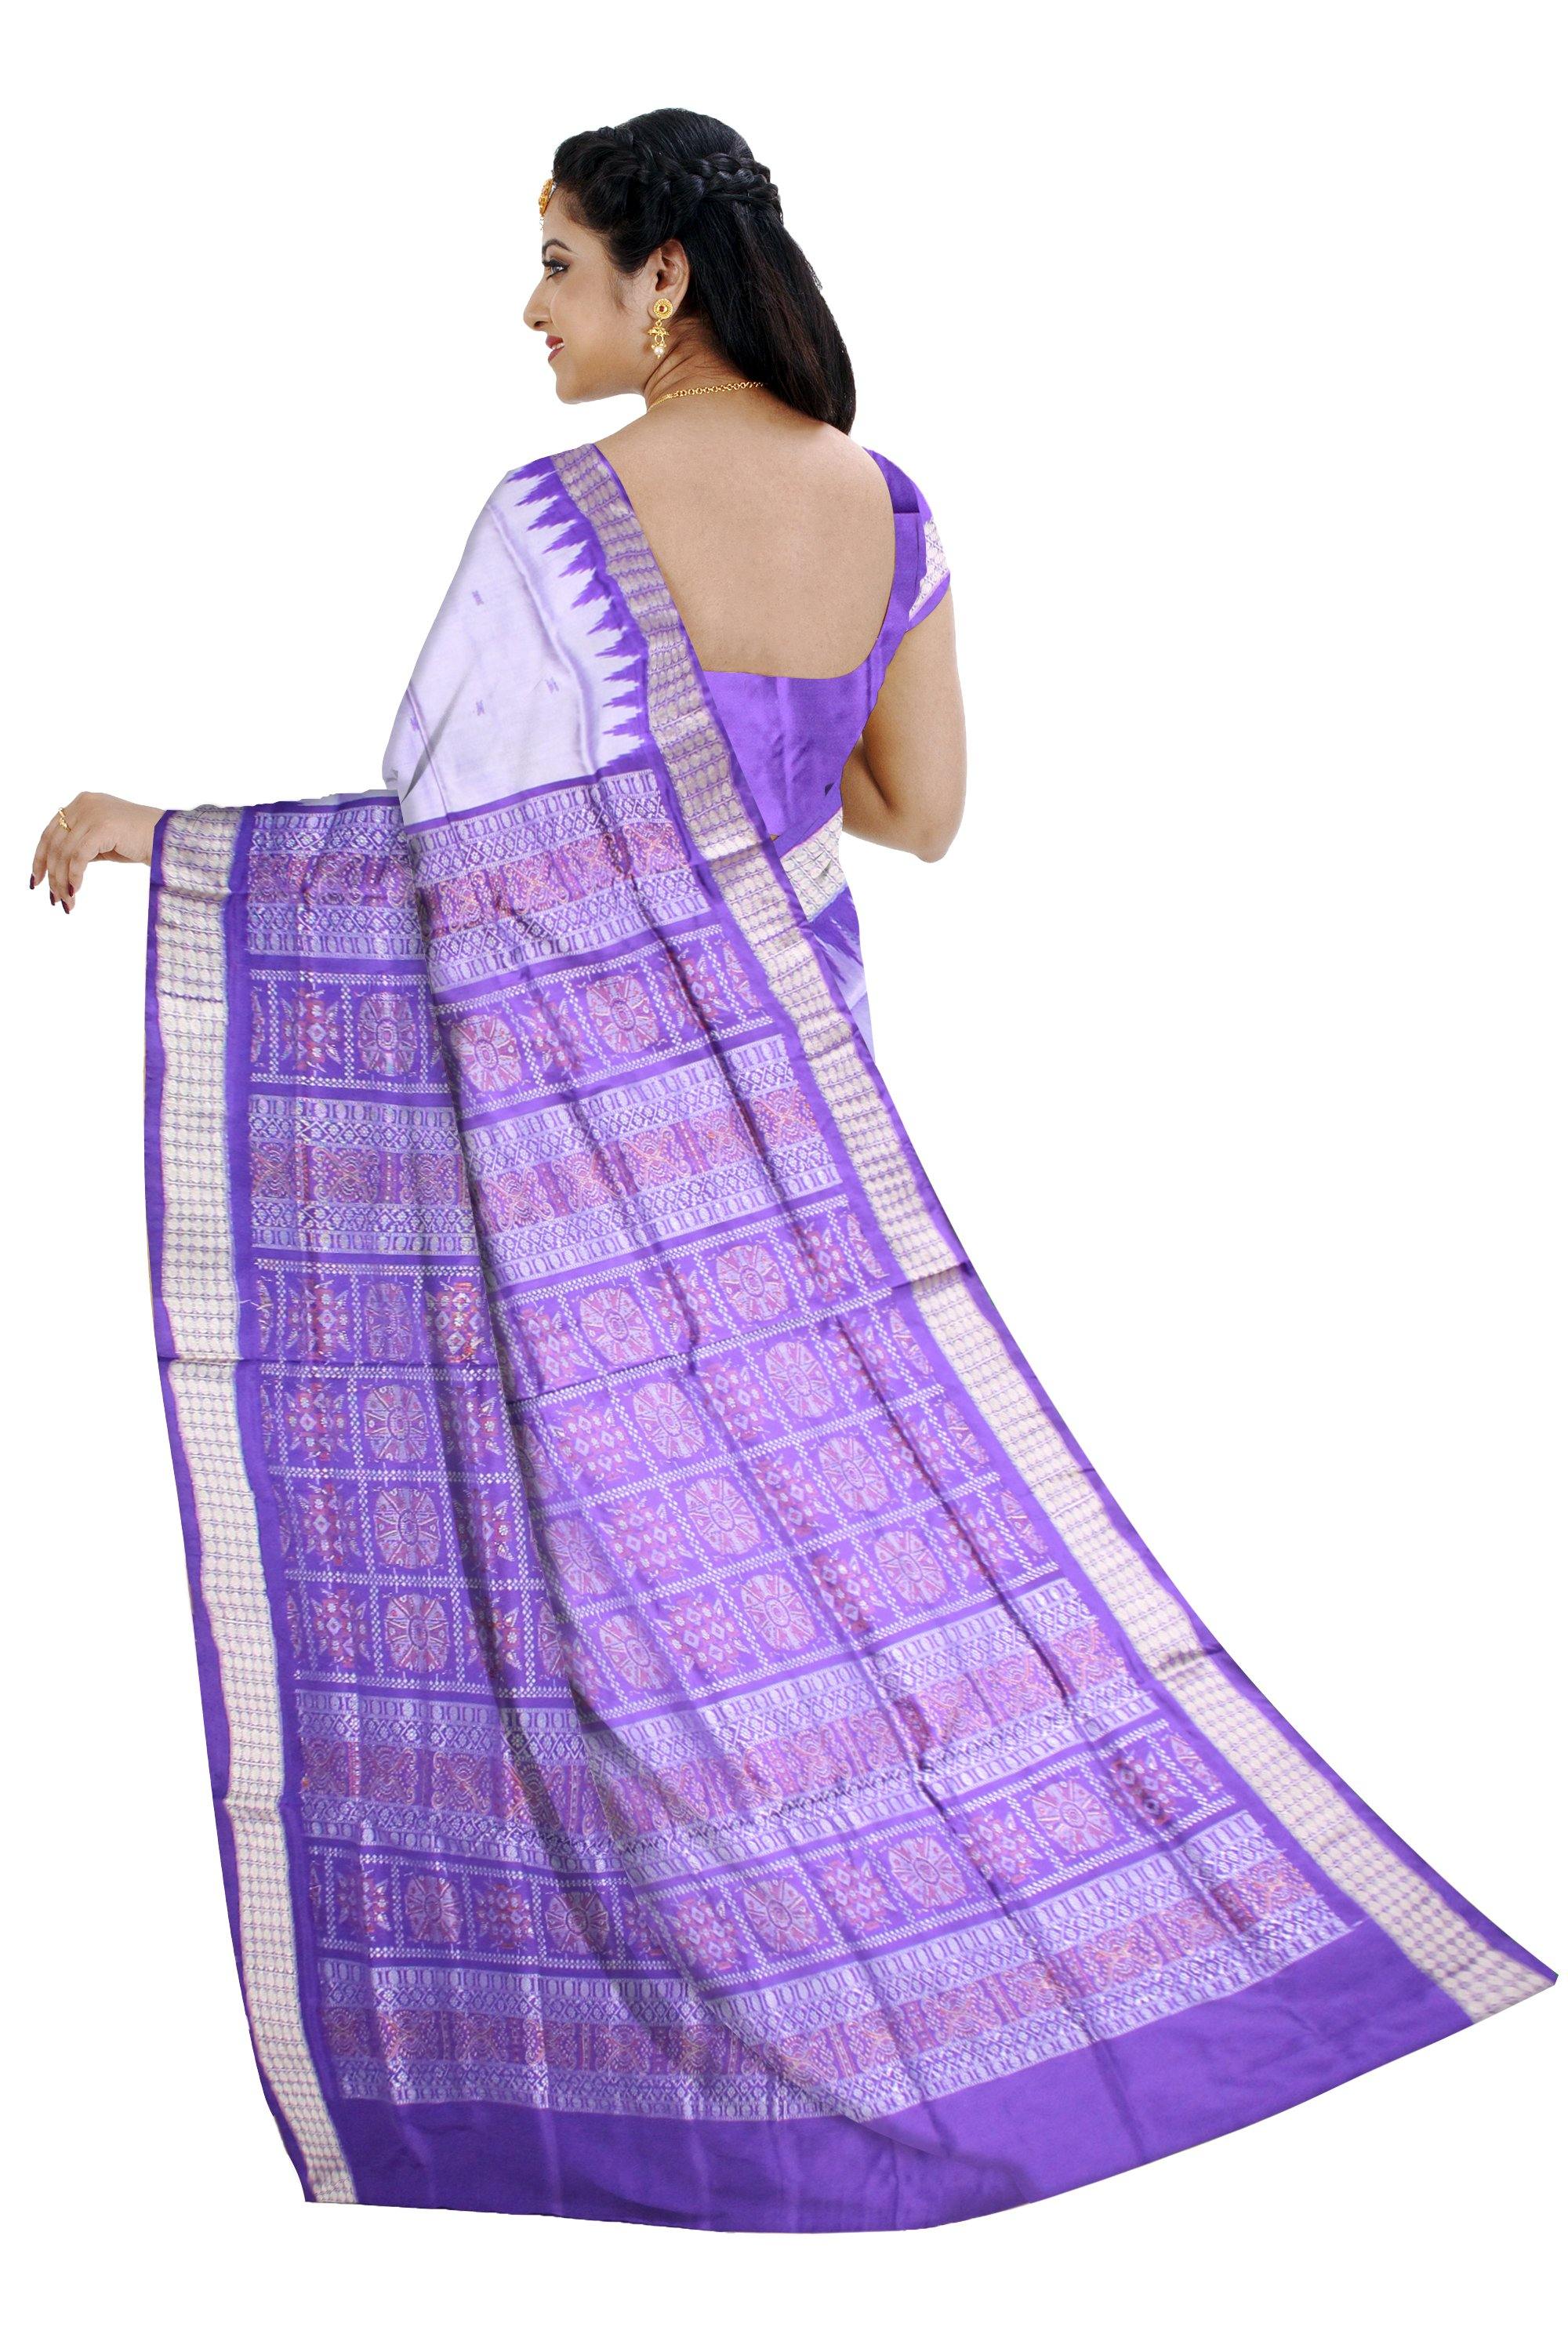 Light violet color bomkei box pattern Sambalpiuri pata saree with blouse piece - Koshali Arts & Crafts Enterprise